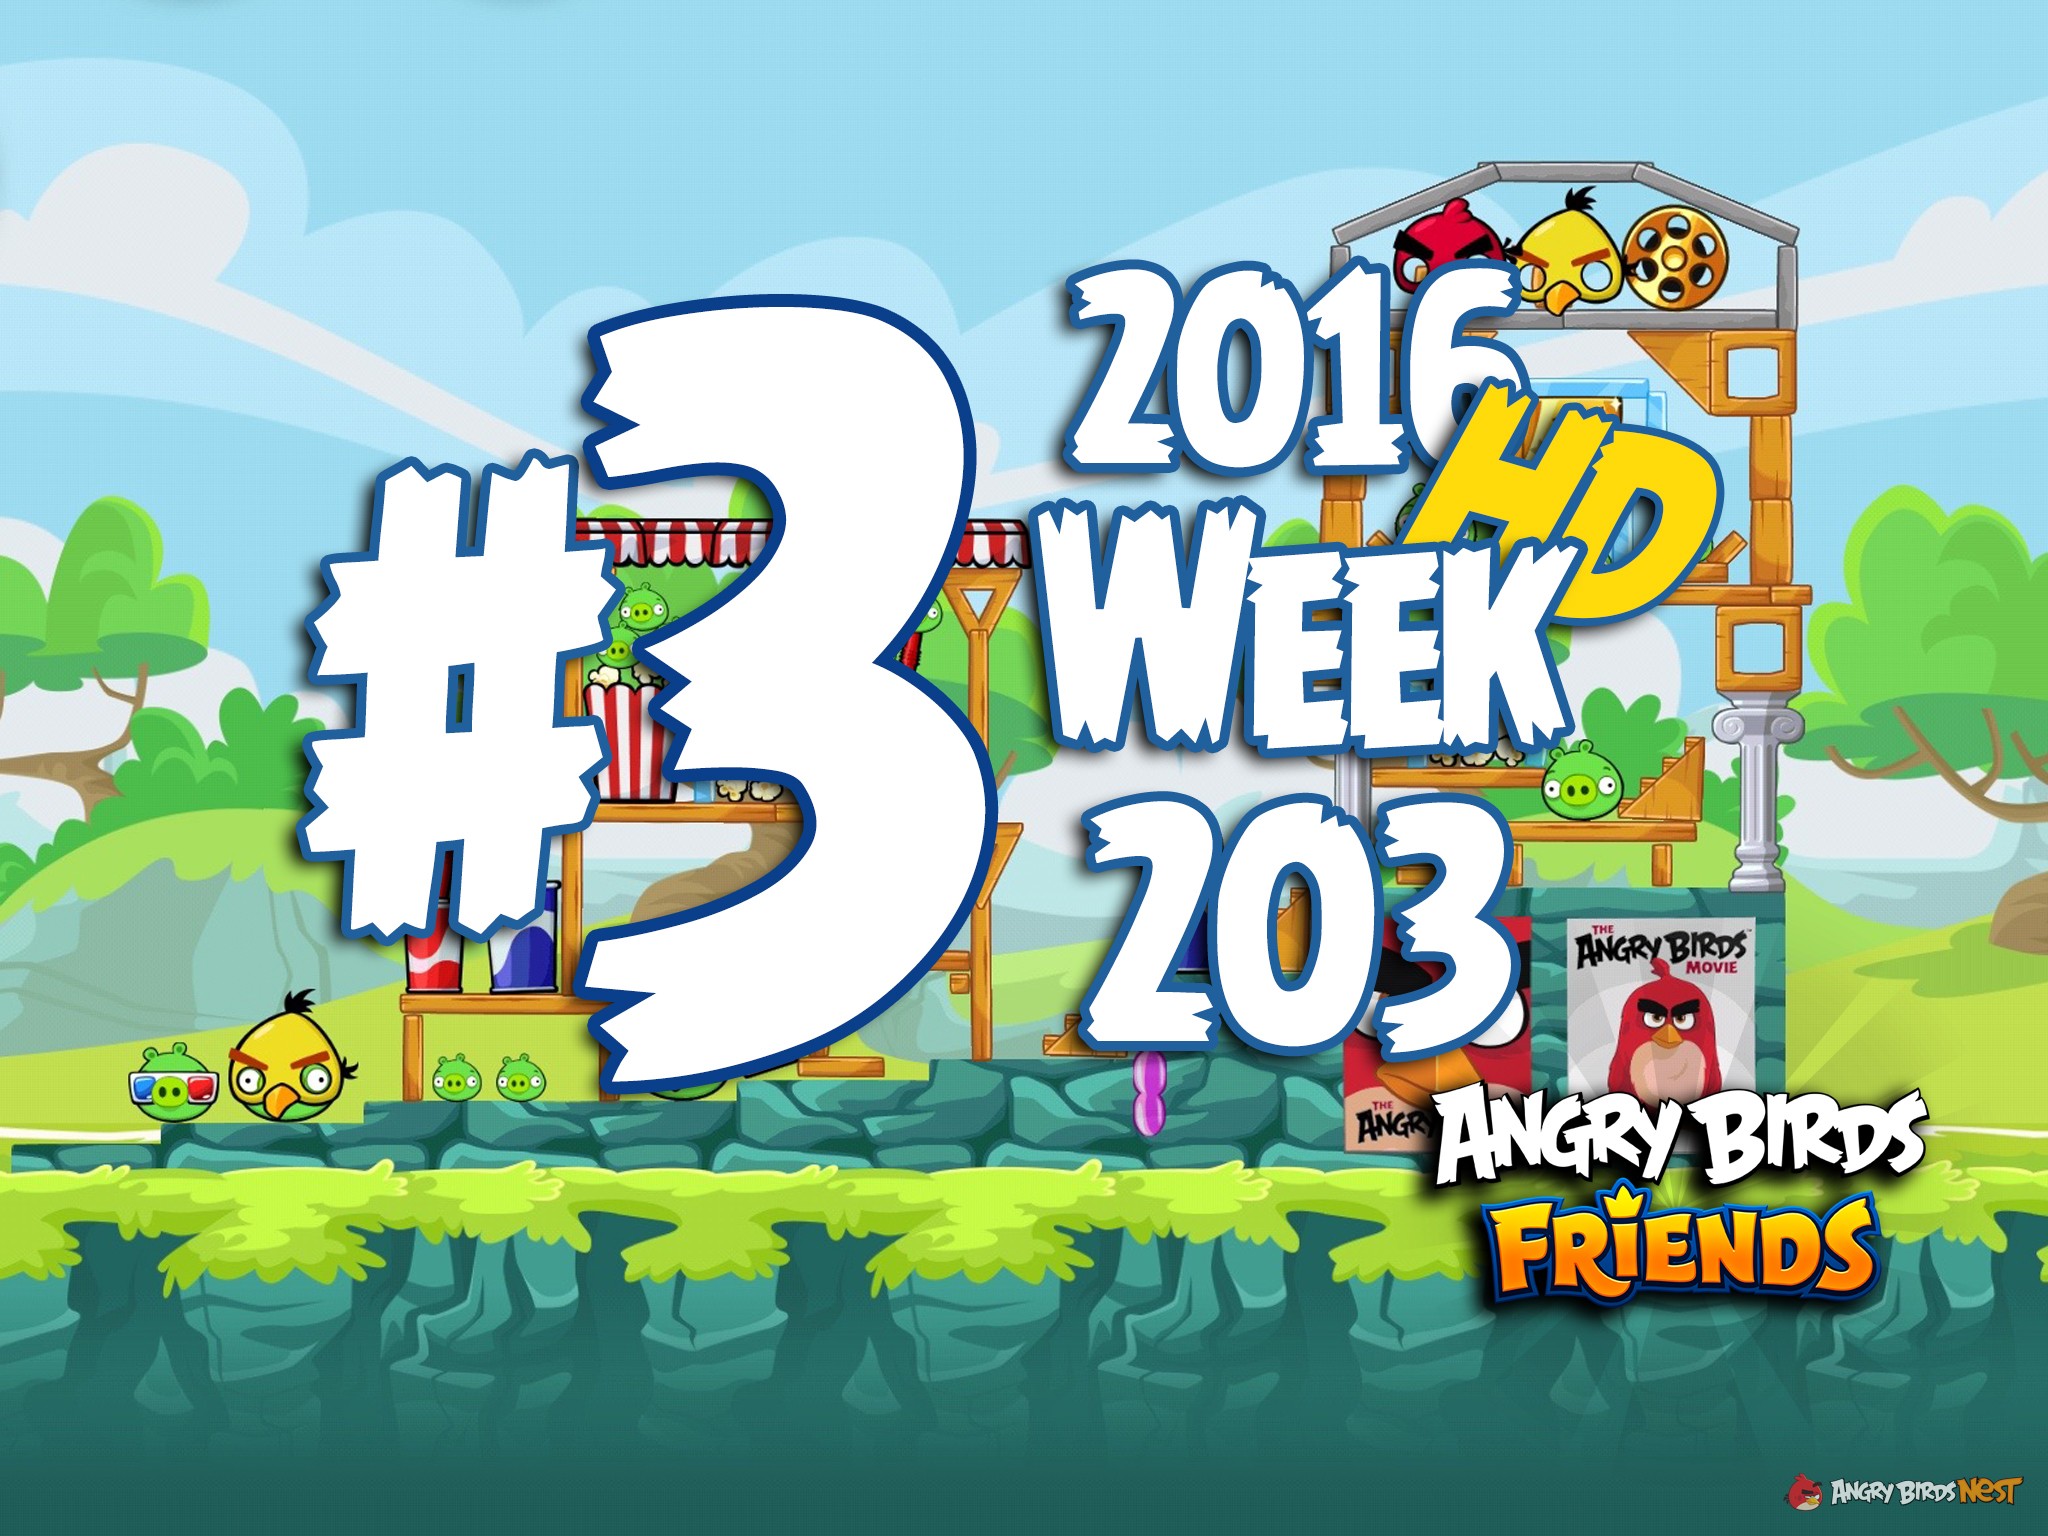 Angry Birds Friends Tournament Level 3 Week 203 Walkthrough | March 31st 2016